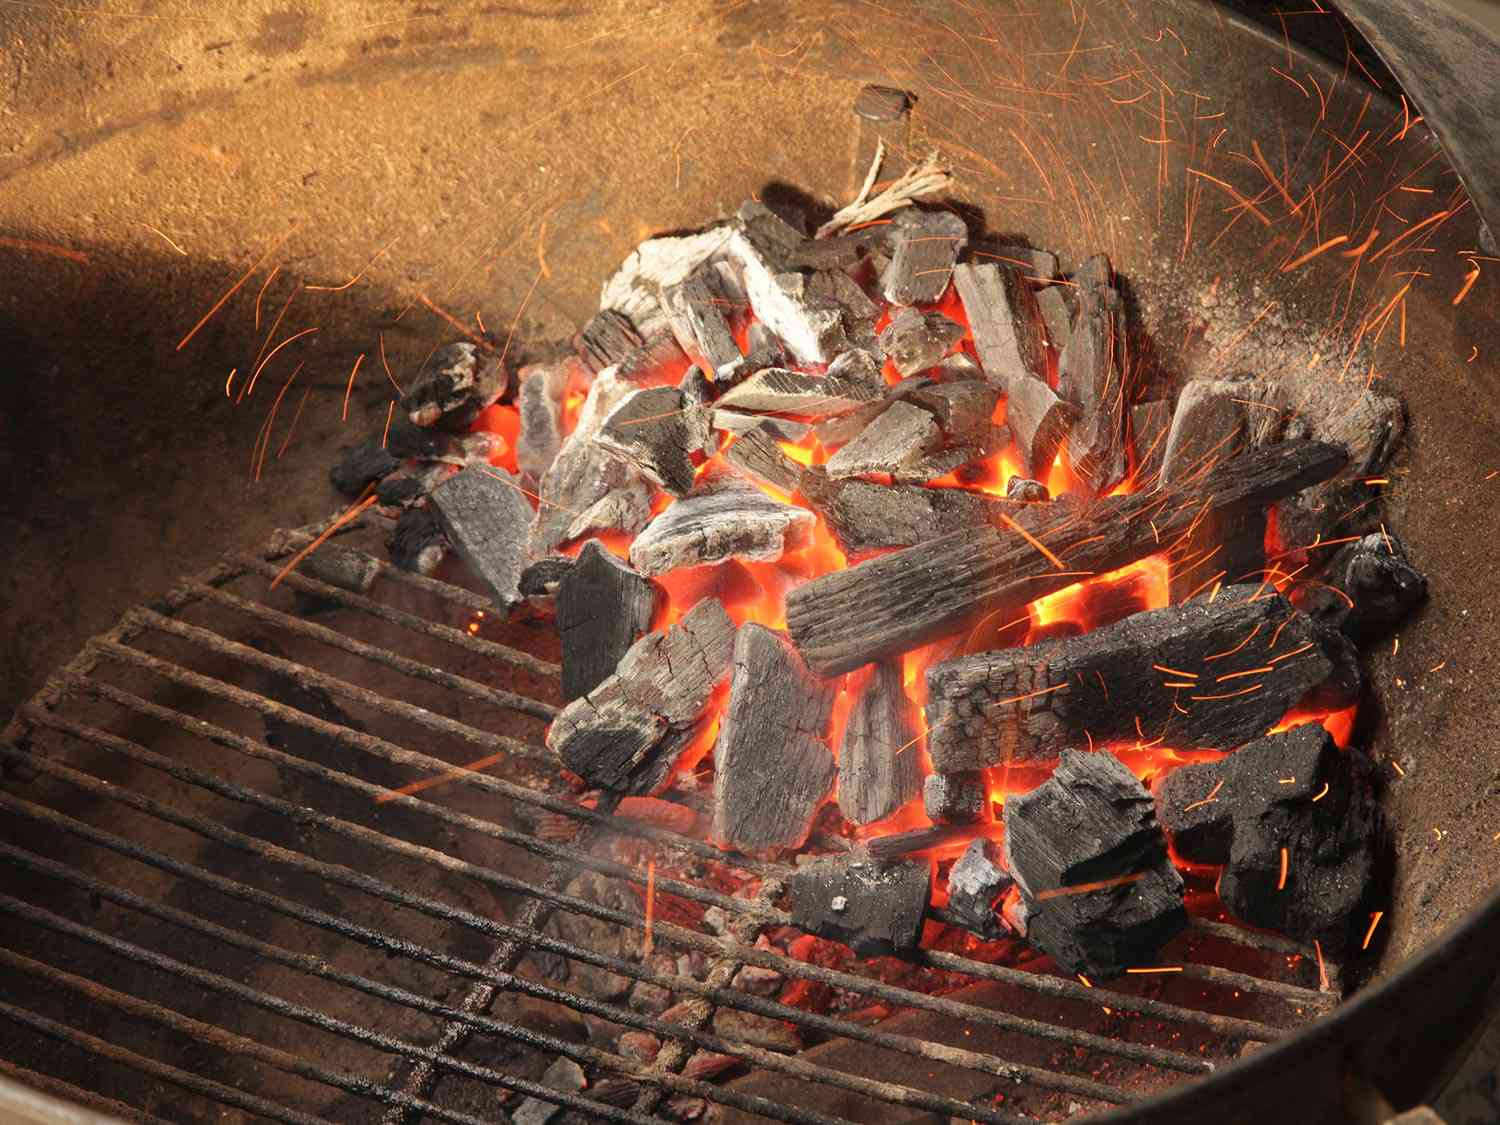 20150610-grilling-mistakes-01.jpg